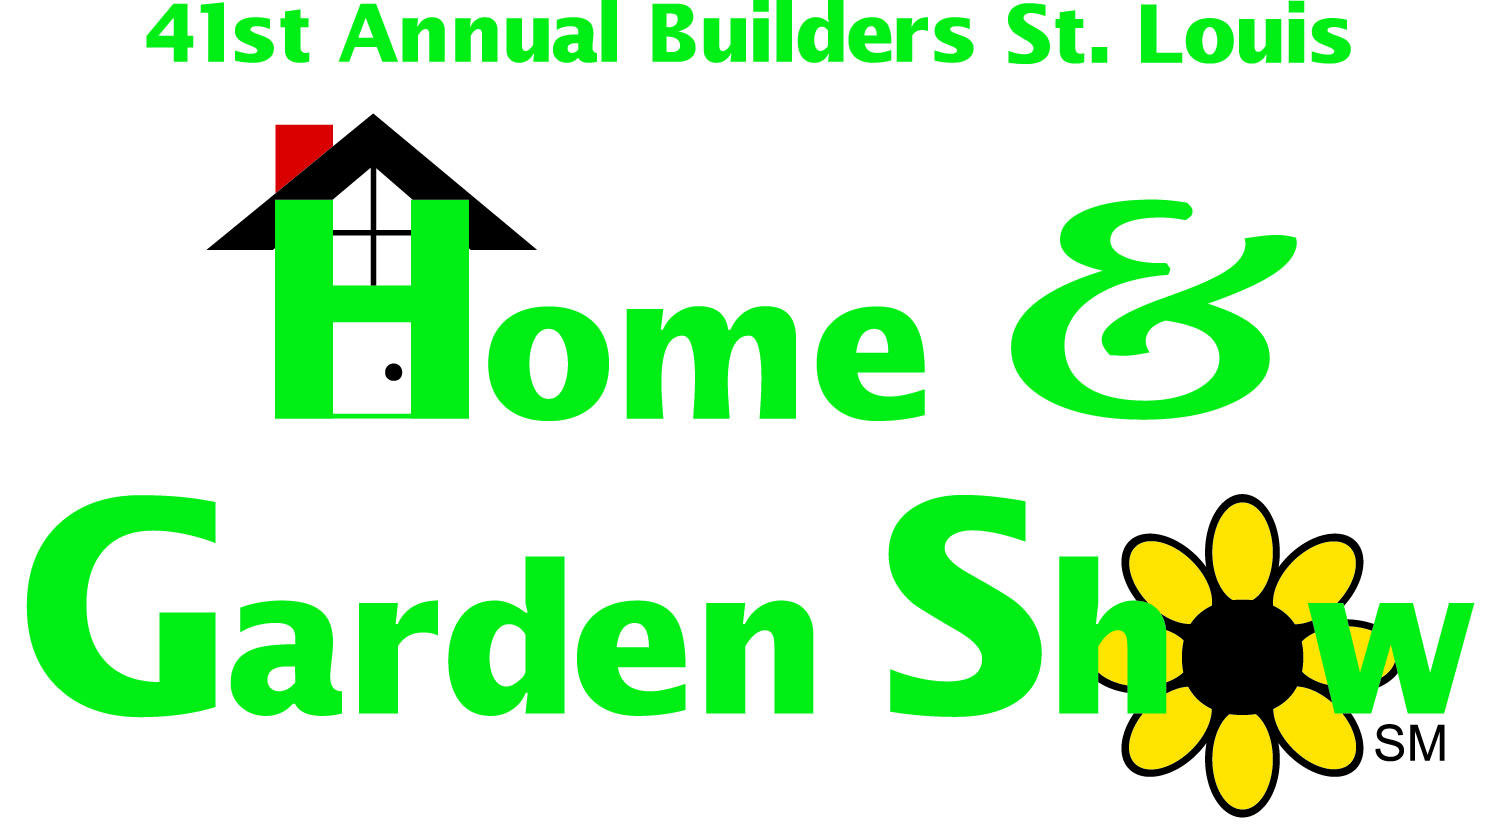 41st Annual Builders St. Louis Home & Garden Show